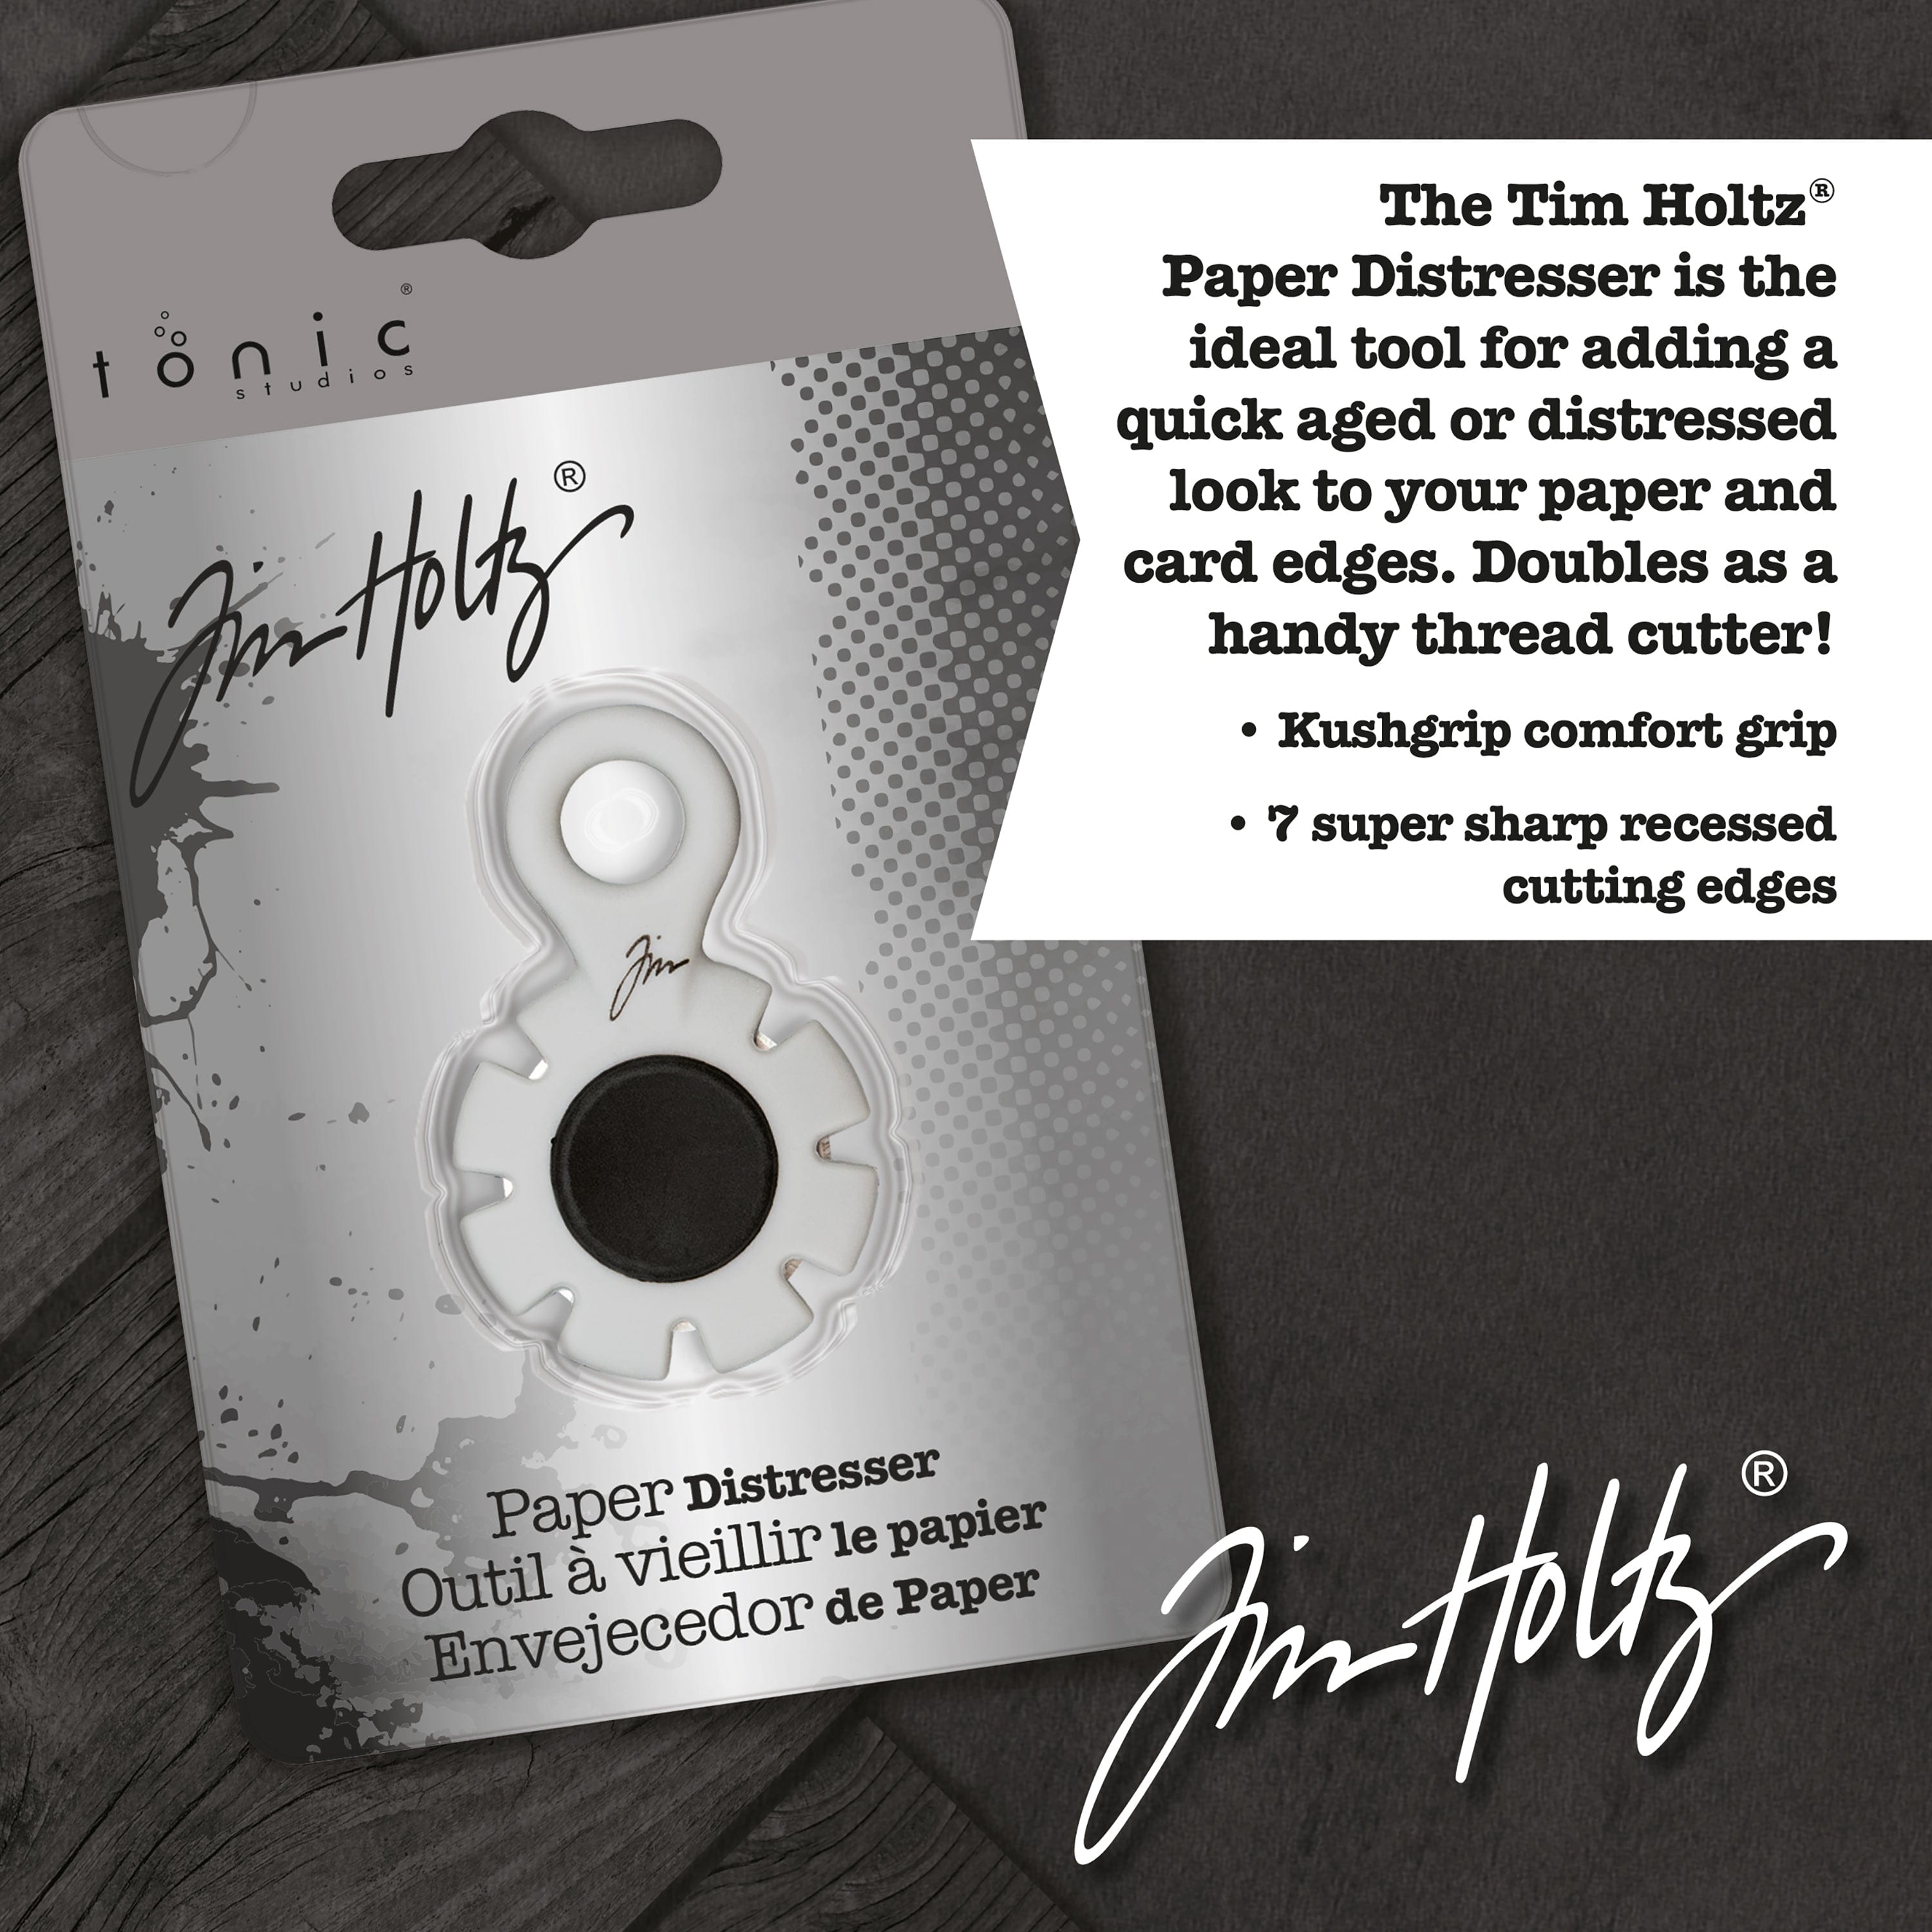 Tim Holtz Paper Distresser - Tonic